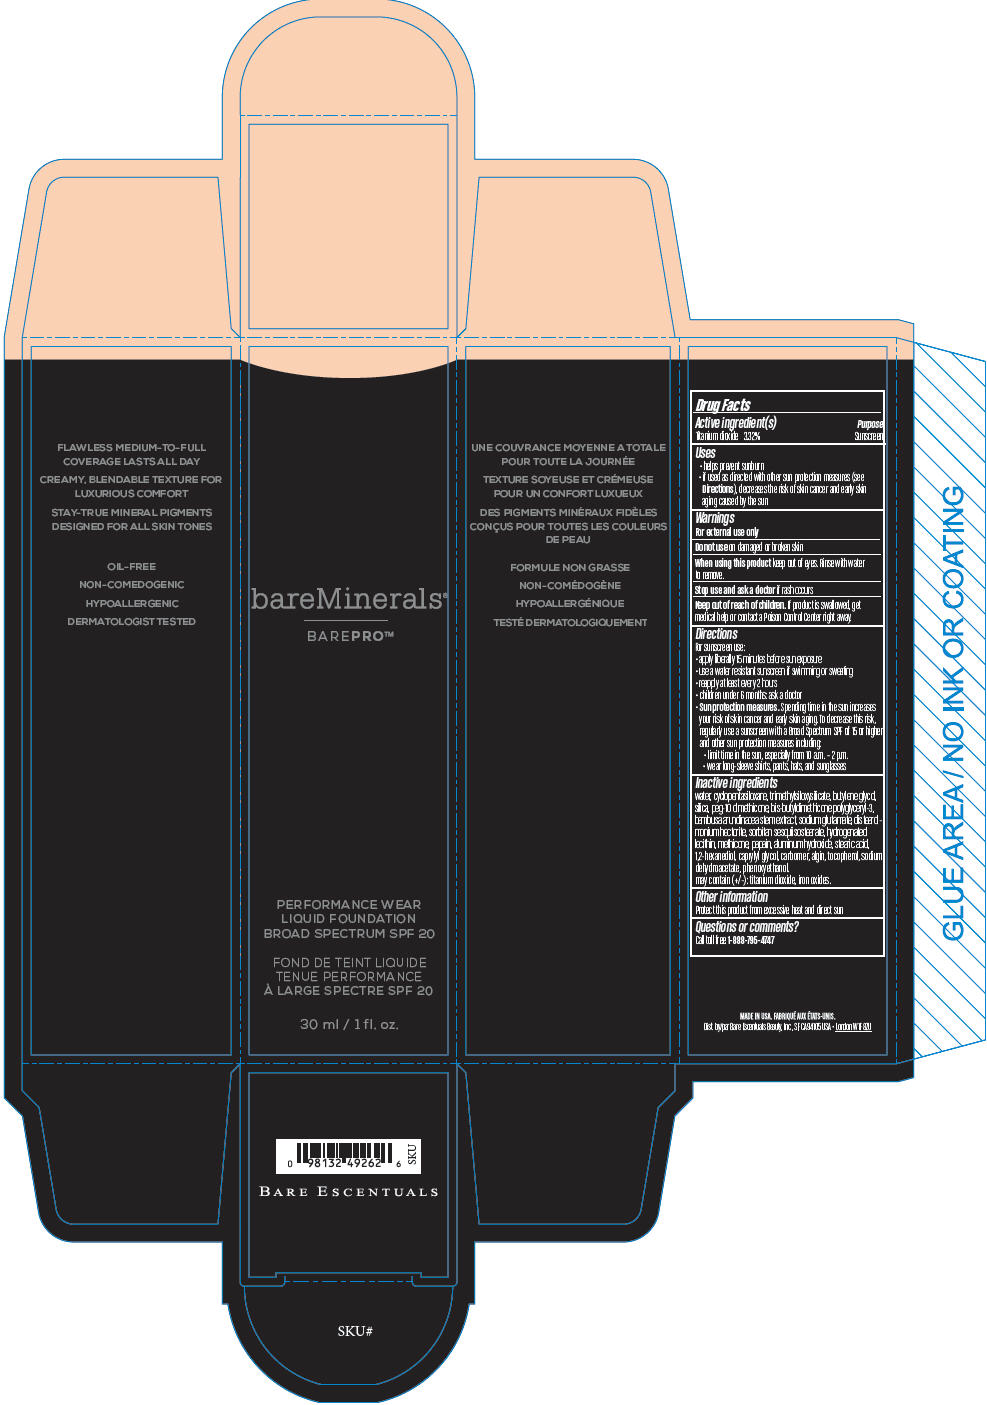 PRINCIPAL DISPLAY PANEL - 30 ml Bottle Carton - Sable 21